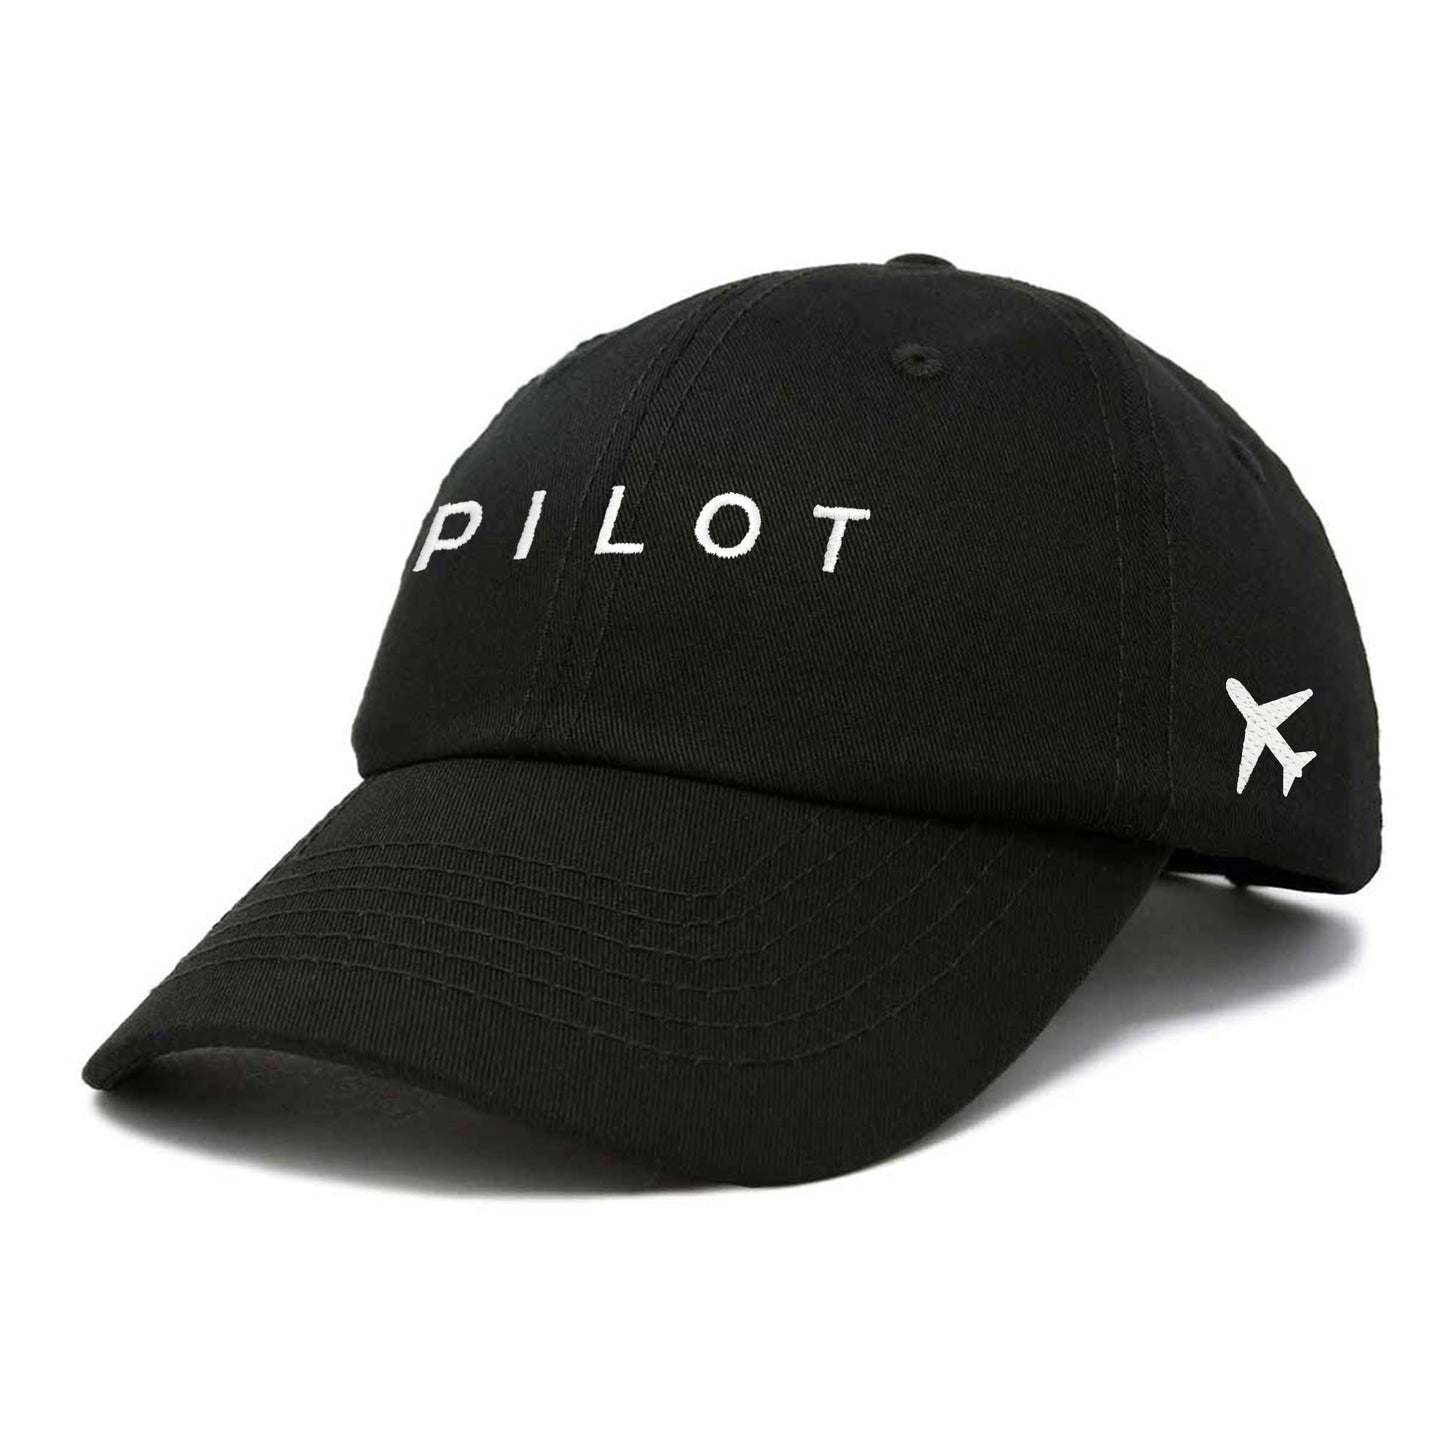 DALIX Pilot Ball Cap